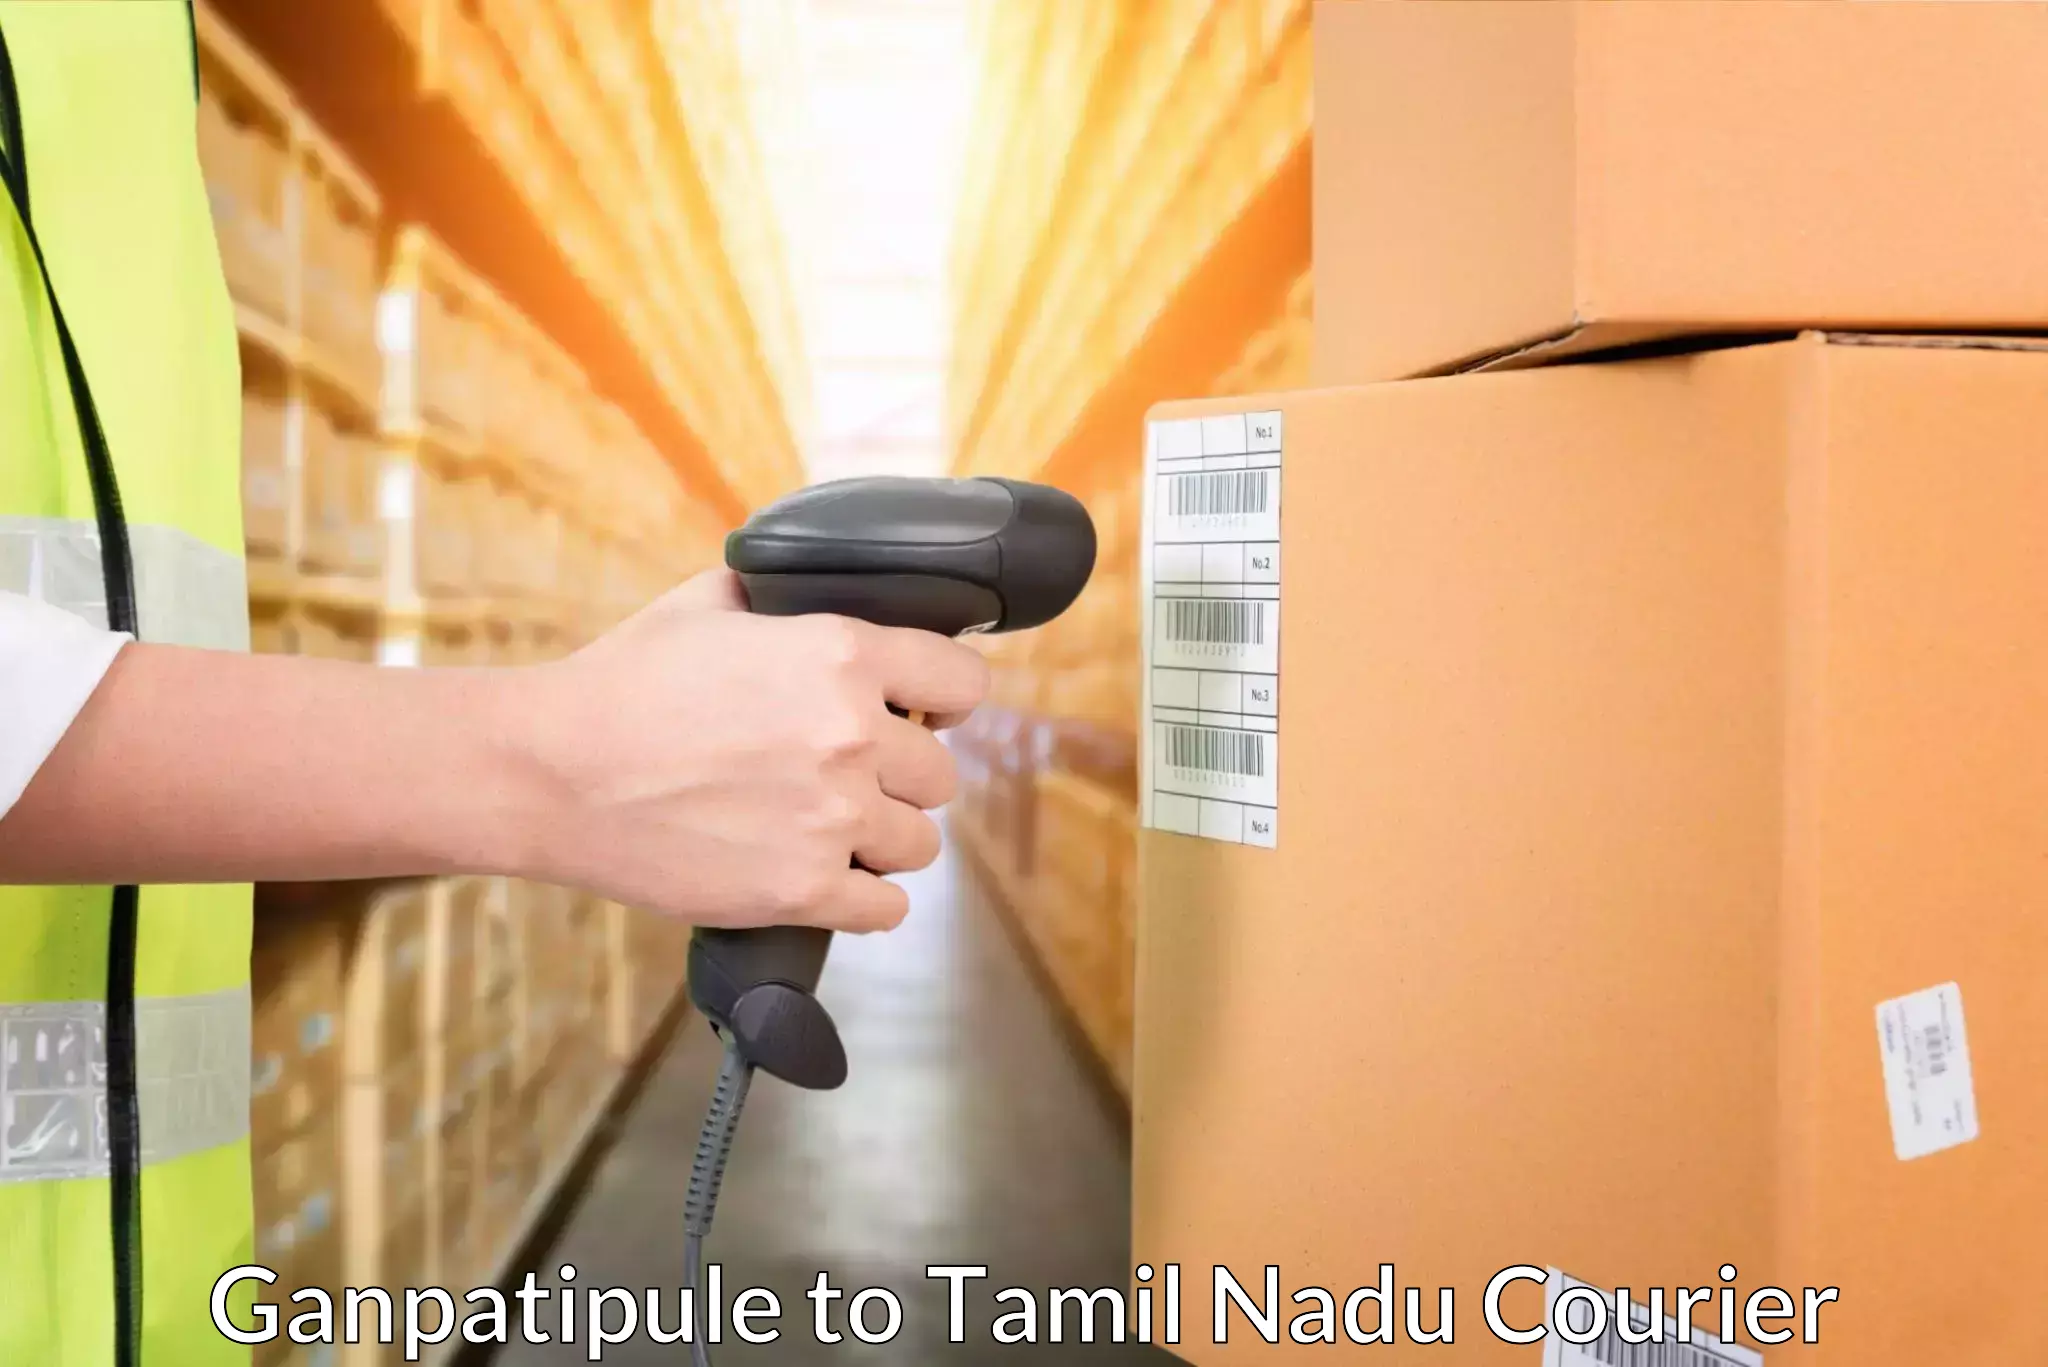 Easy access courier services in Ganpatipule to Villupuram